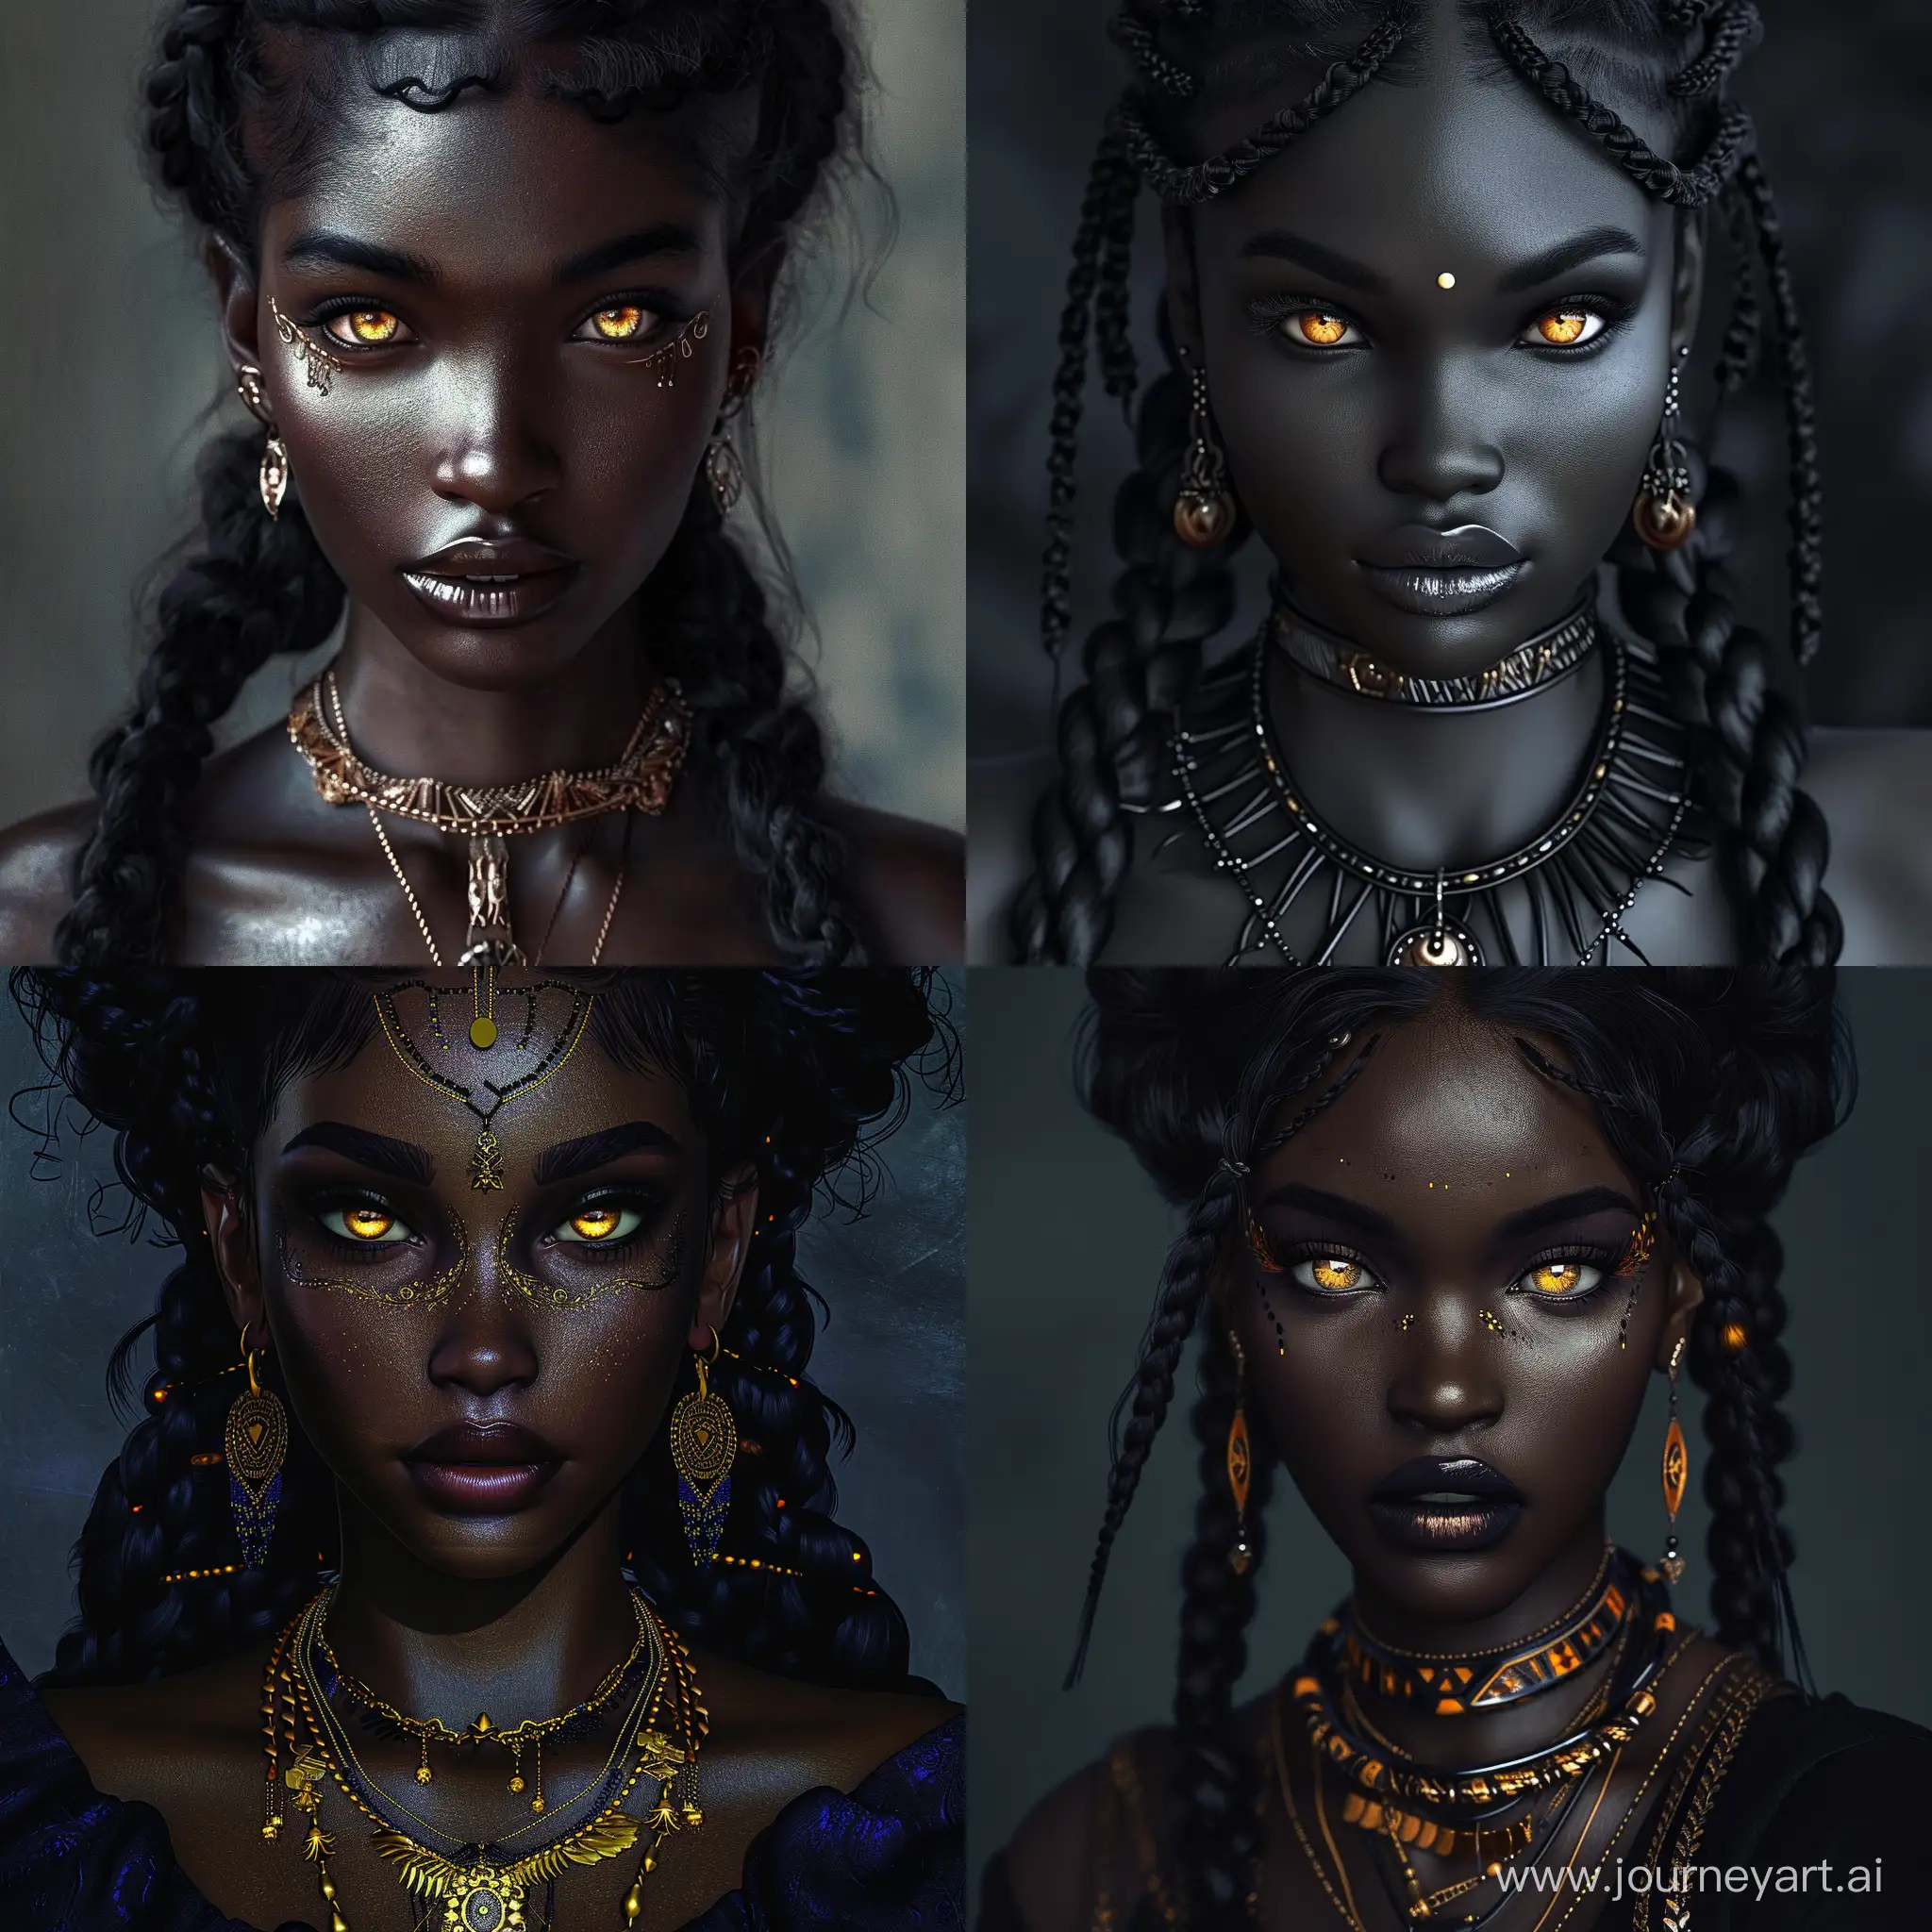 African girl, Africa, dark skin, golden eyes, dark hair, African braids, necklace, earrings, makeup, (detailed skin texture),